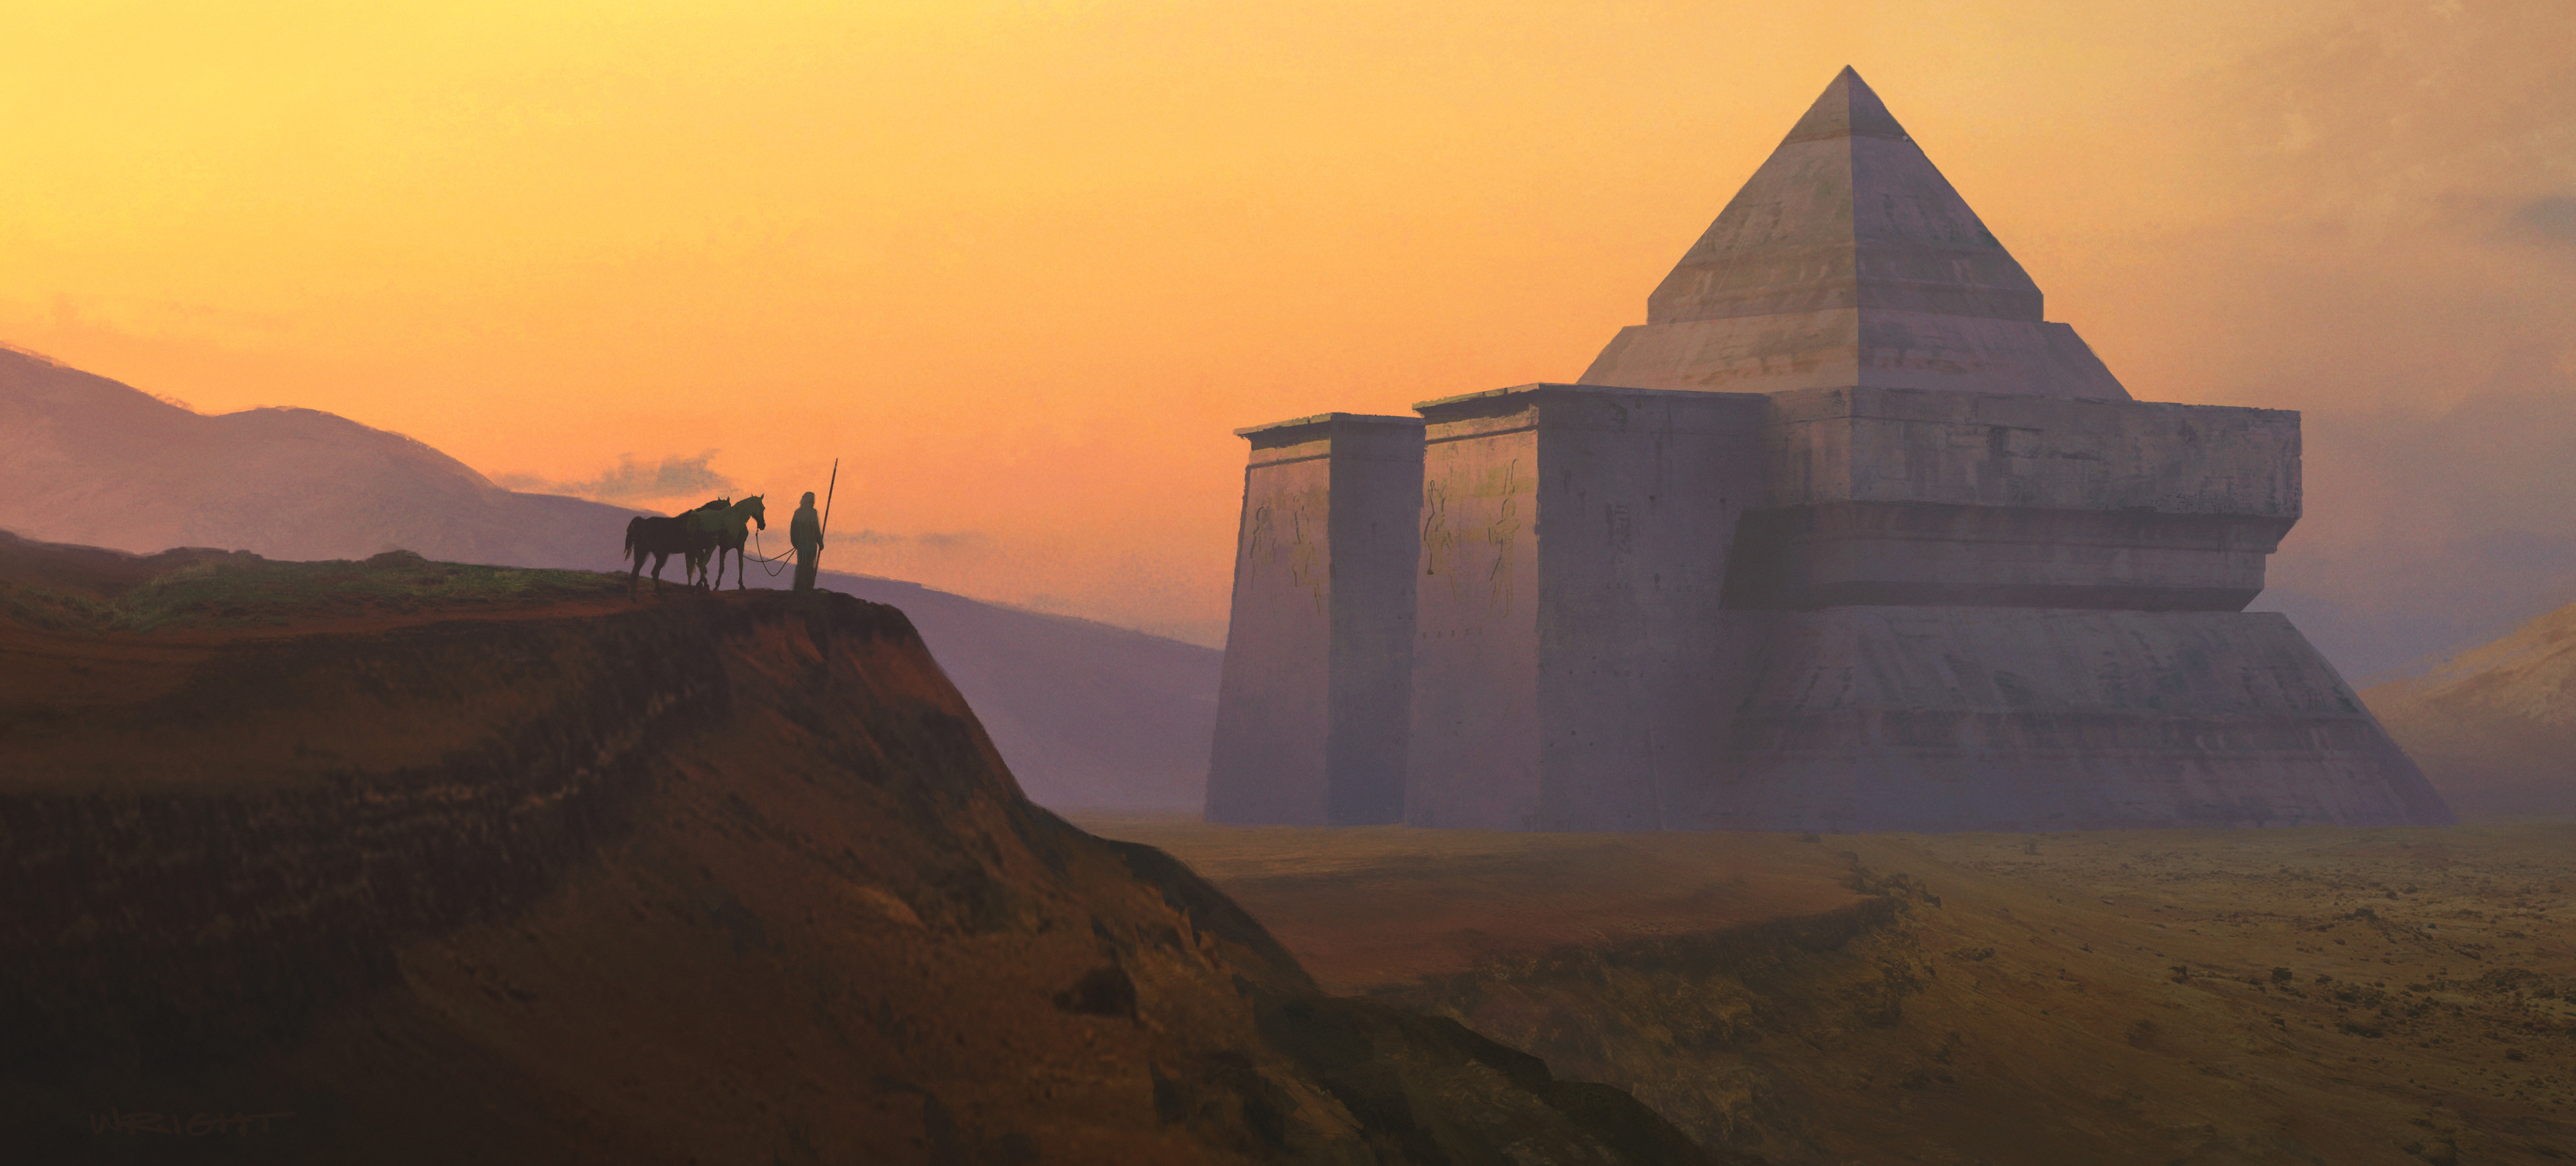 Yung desert temples. Египет концепт арт пирамида. Храм солнца Египет. Древний Египет футуризм. Пирамиды Египта футуризм.